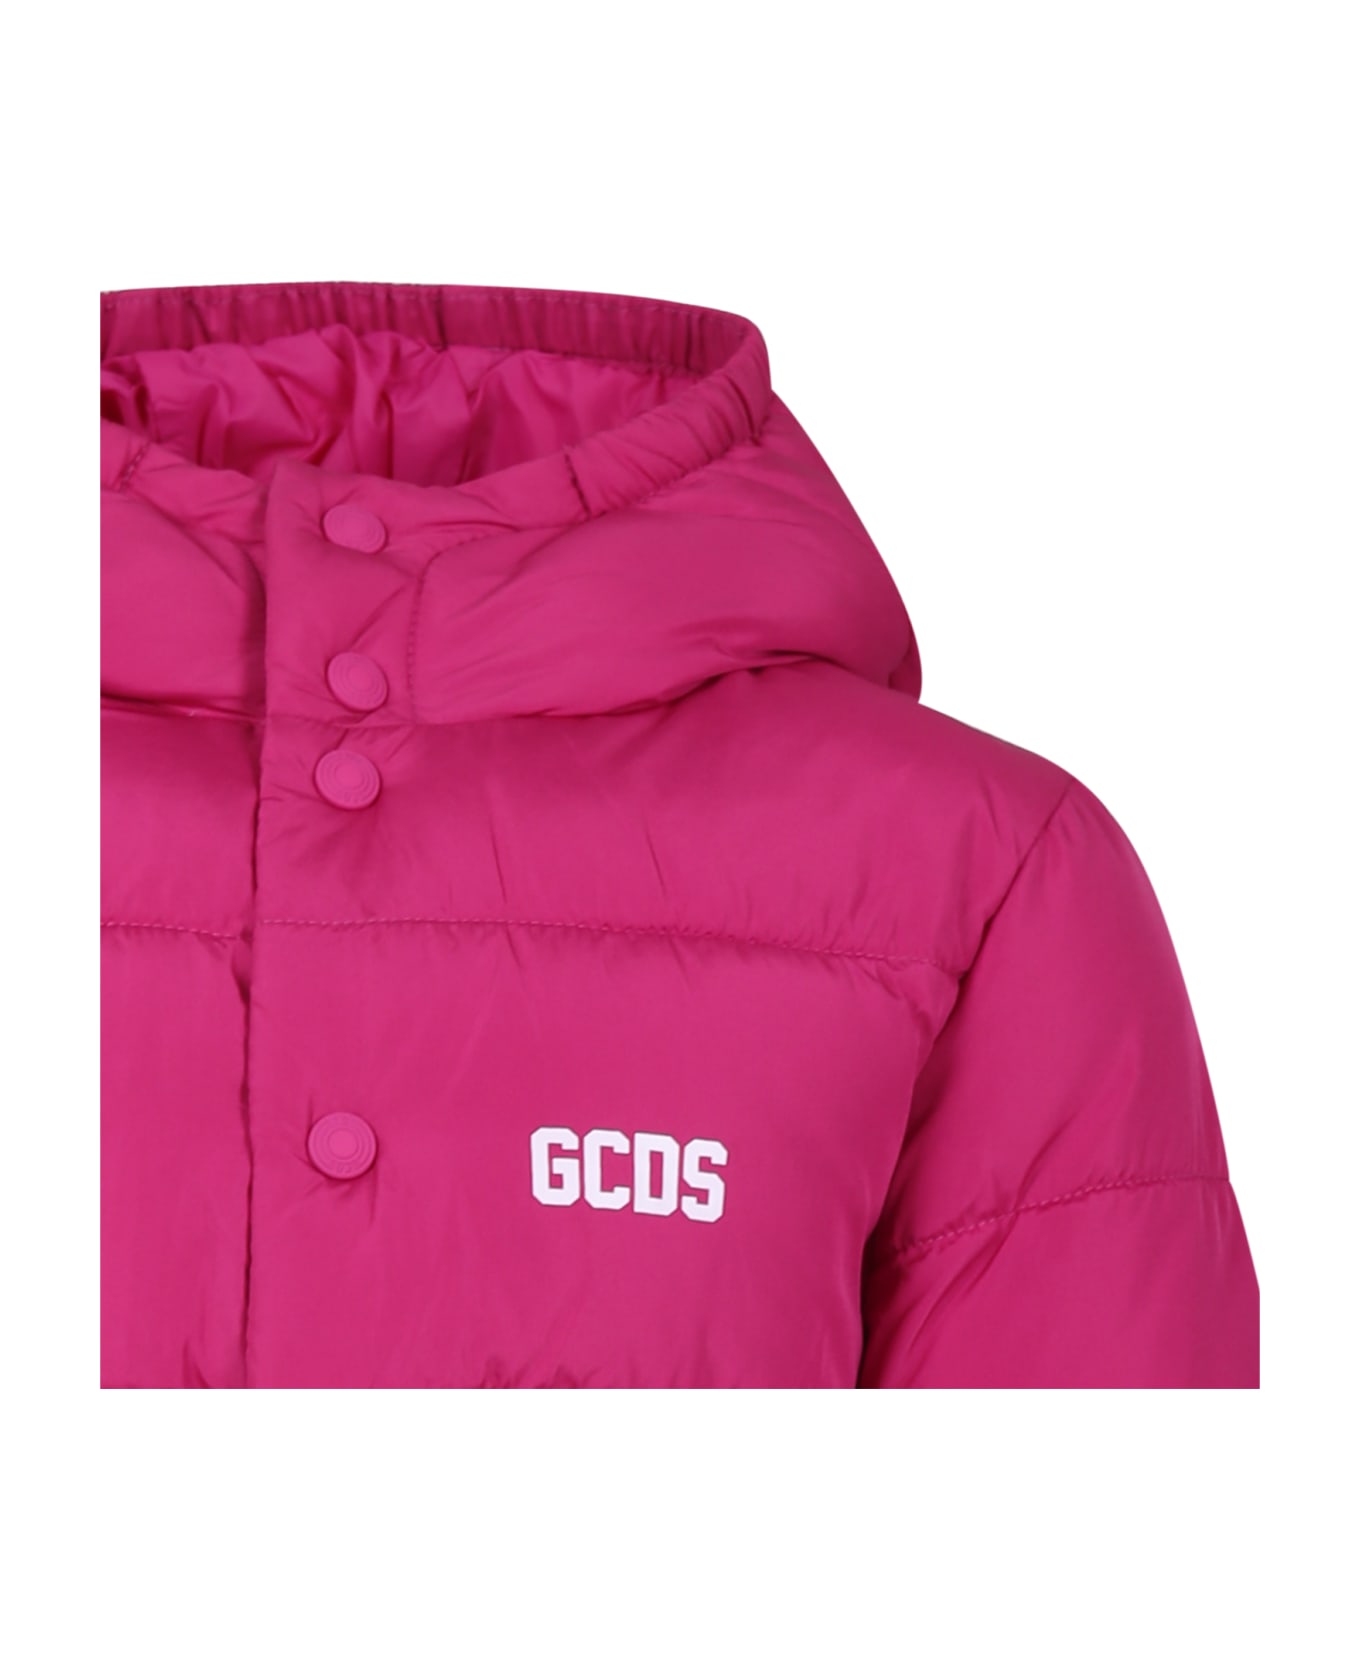 GCDS Mini Fuchsia Down Jacket For Girl With Logo - Fuchsia